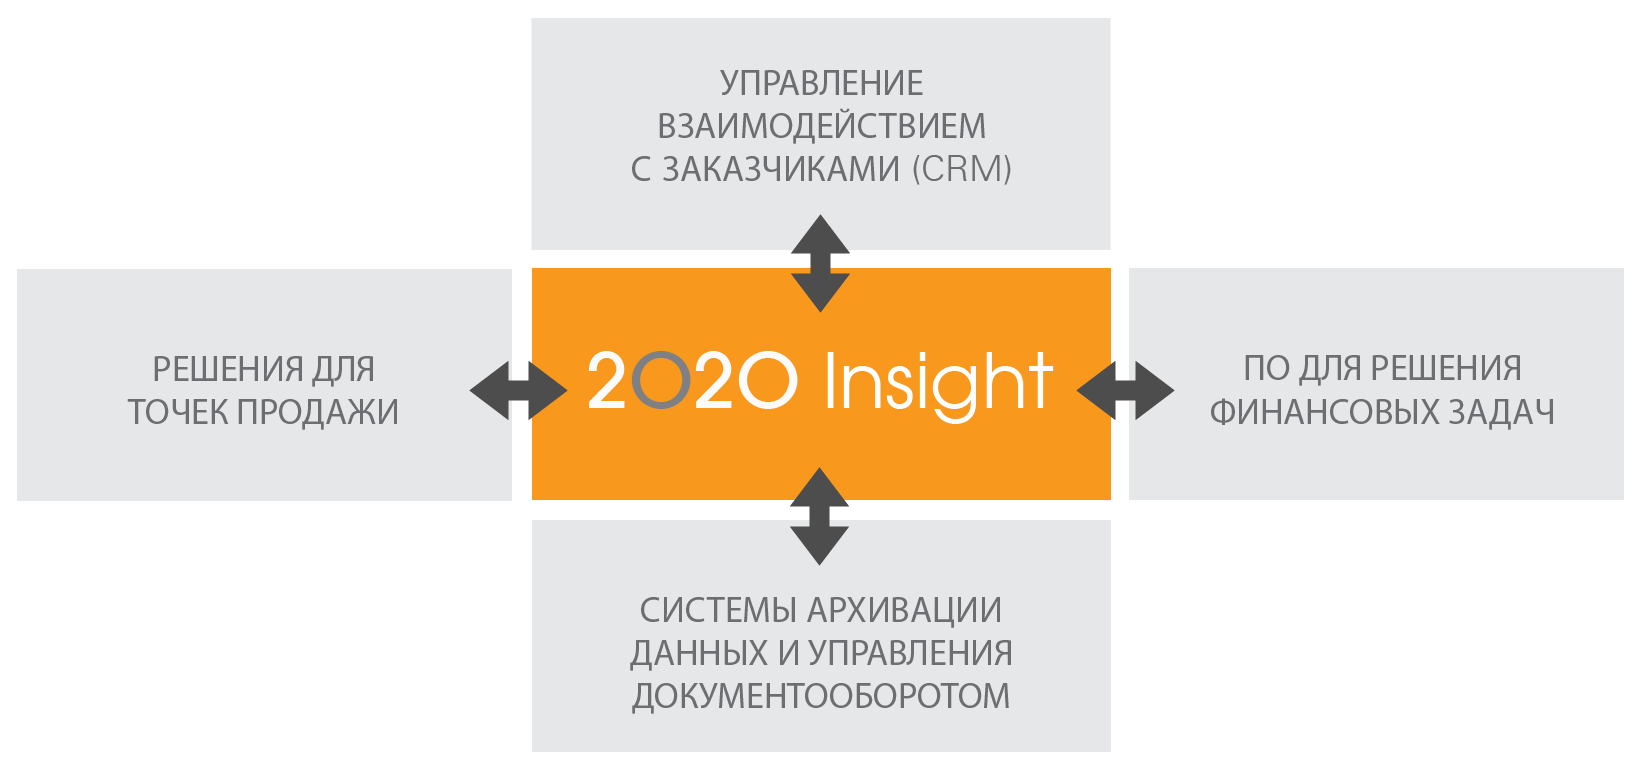 2020 Insight 2020 Insight企业制造解决方案